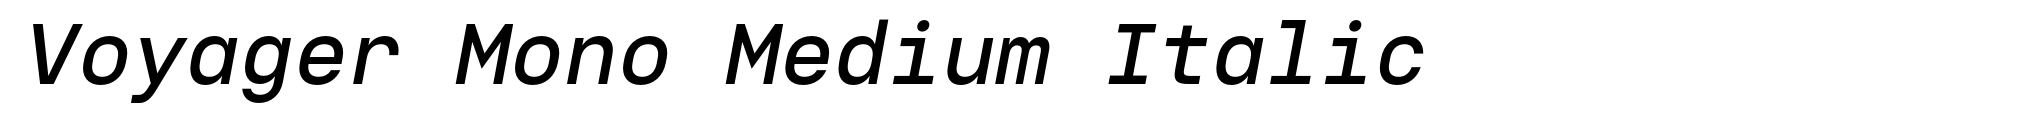 Voyager Mono Medium Italic image